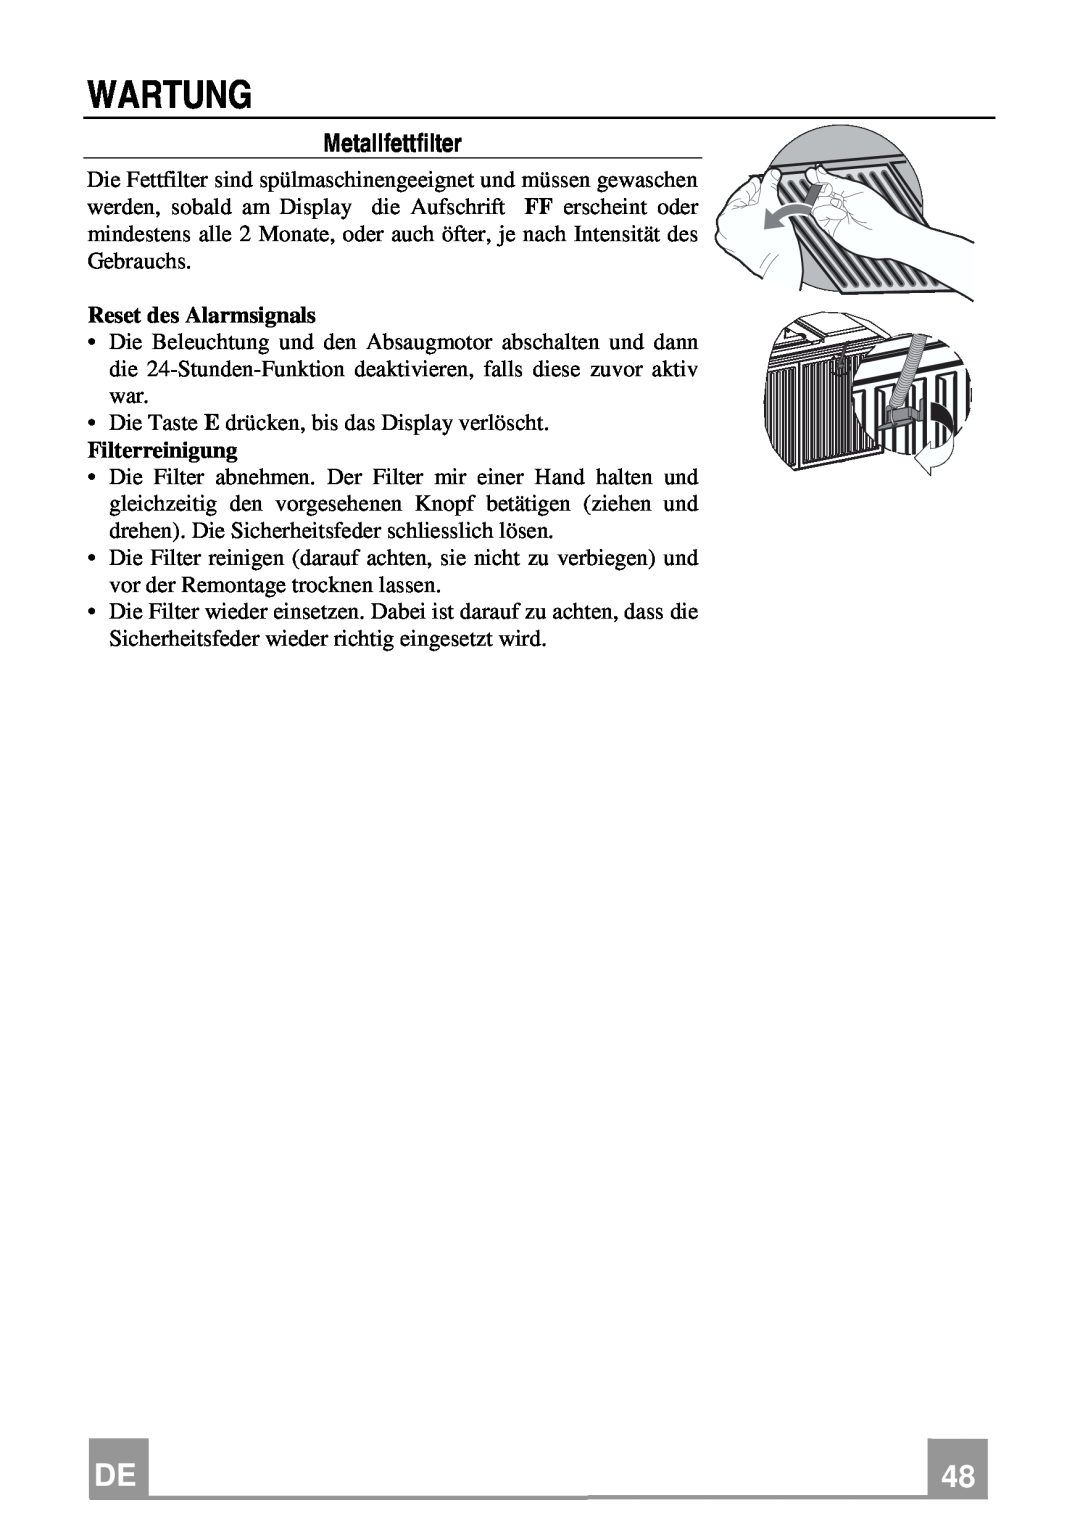 Franke Consumer Products FDMO 607 I manual Wartung, Metallfettfilter, Reset des Alarmsignals, Filterreinigung 